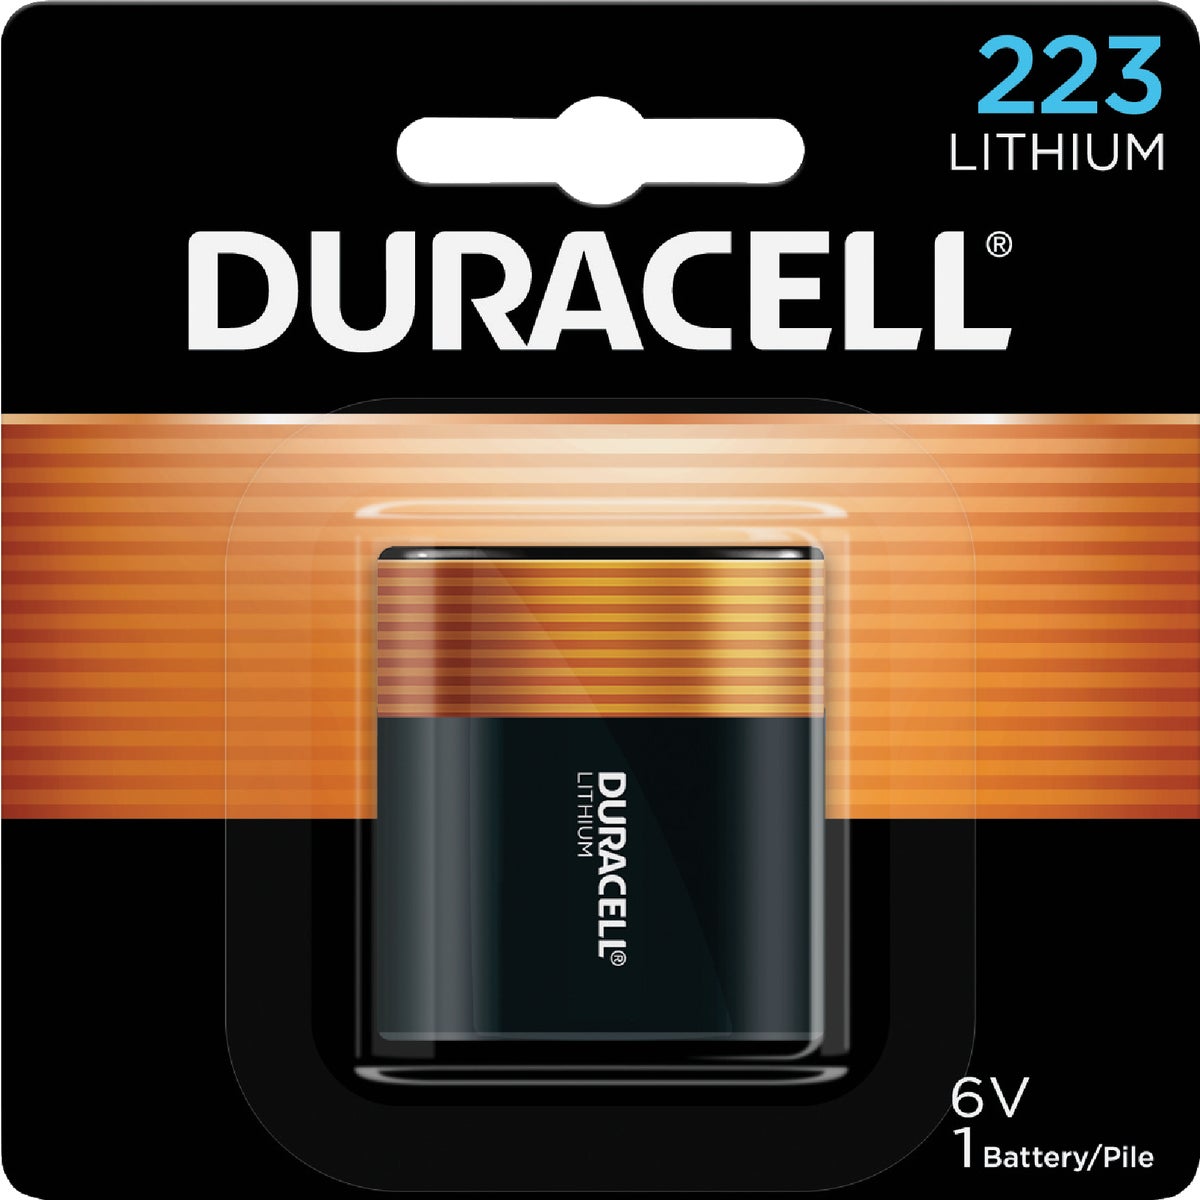 Duracell 223 Ultra Lithium Battery